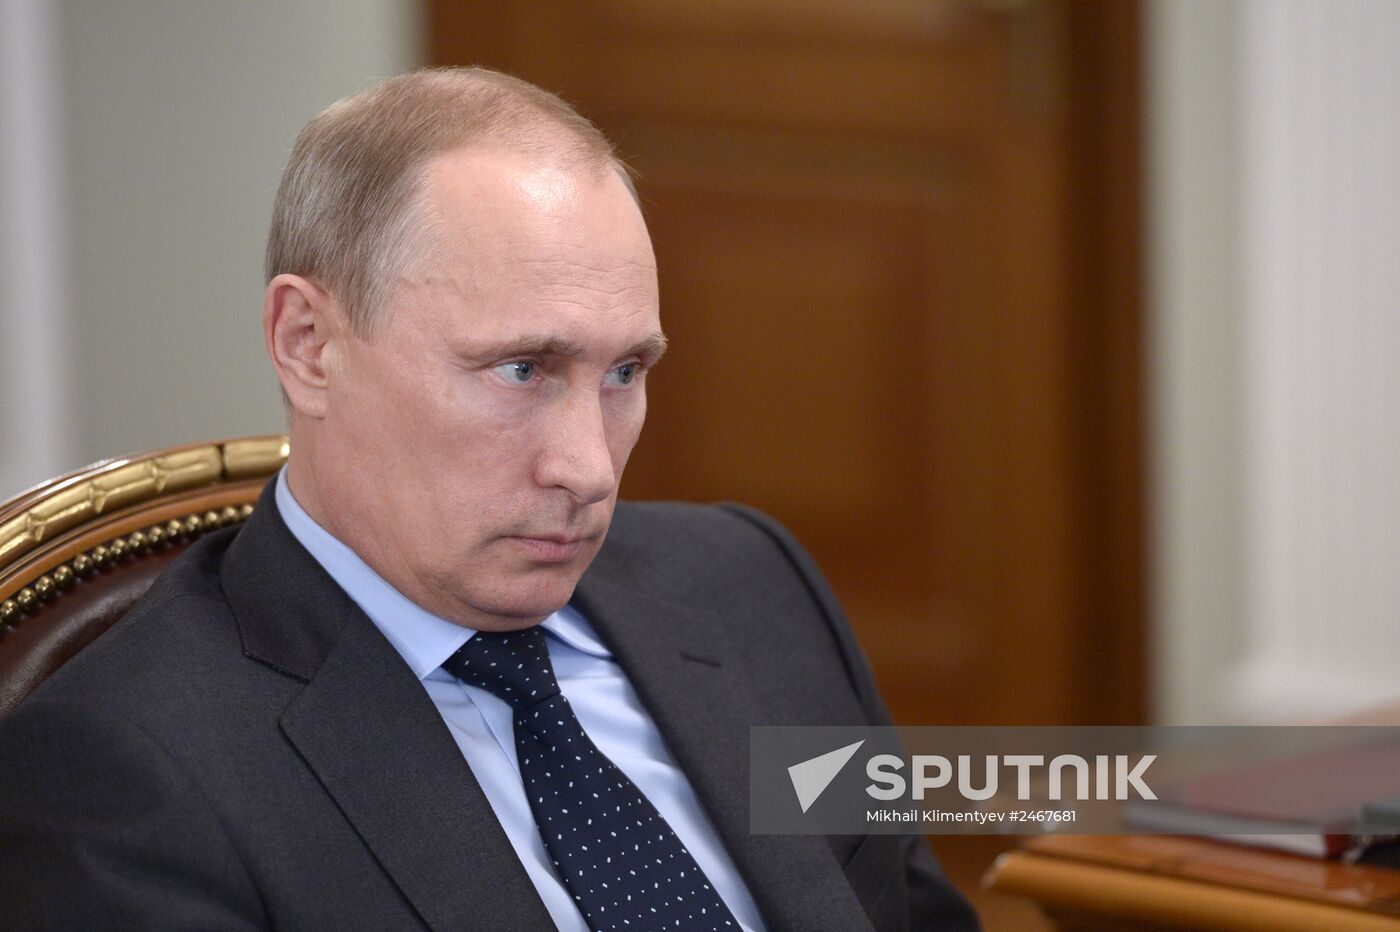 Vladimir Putin at a working meeting with Mikhail Ignatyev